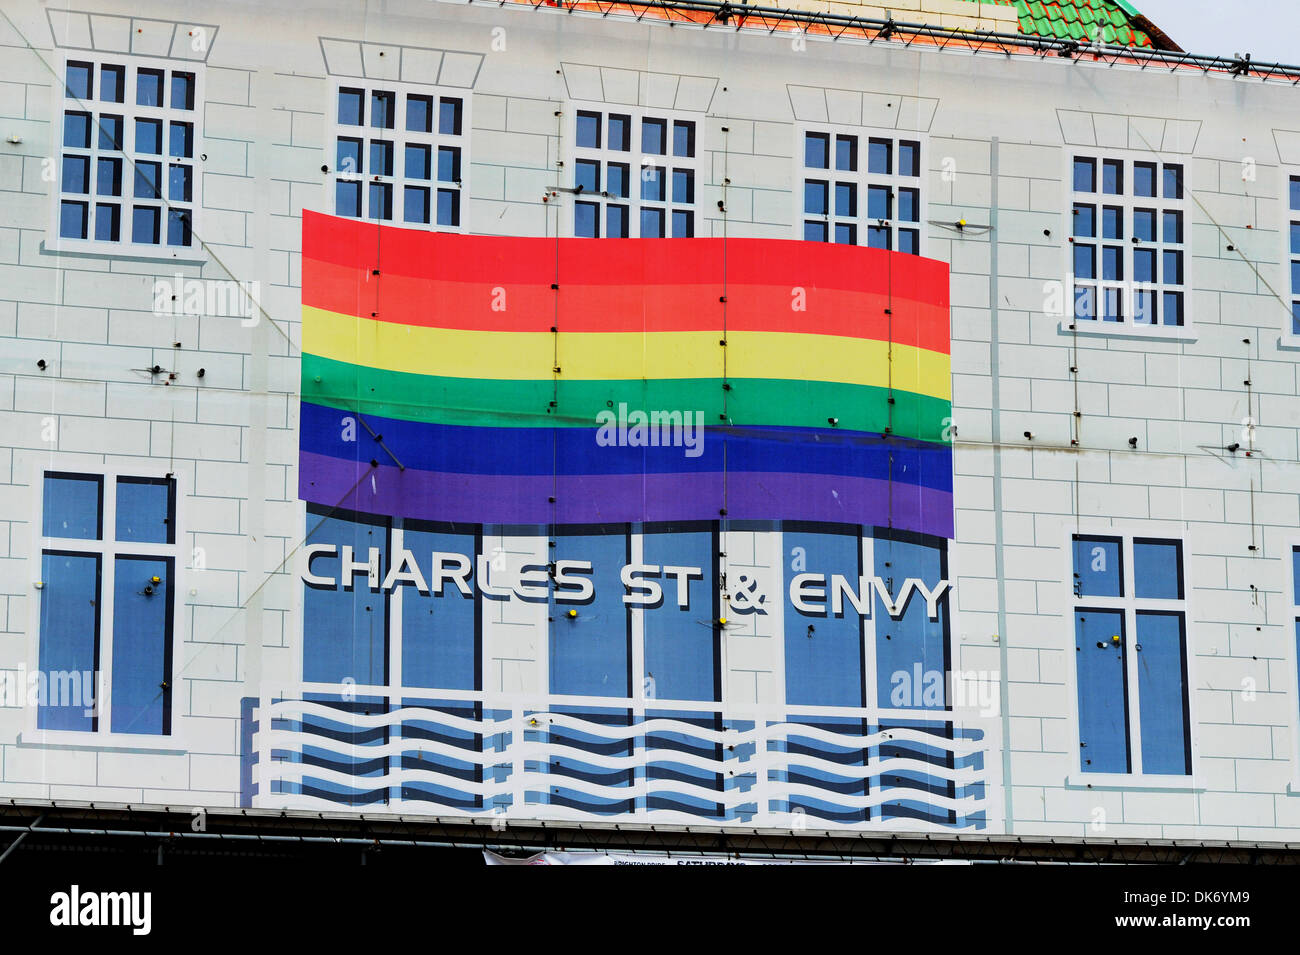 Charles St & Envy during gay pride week at Brighton, UK Stock Photo